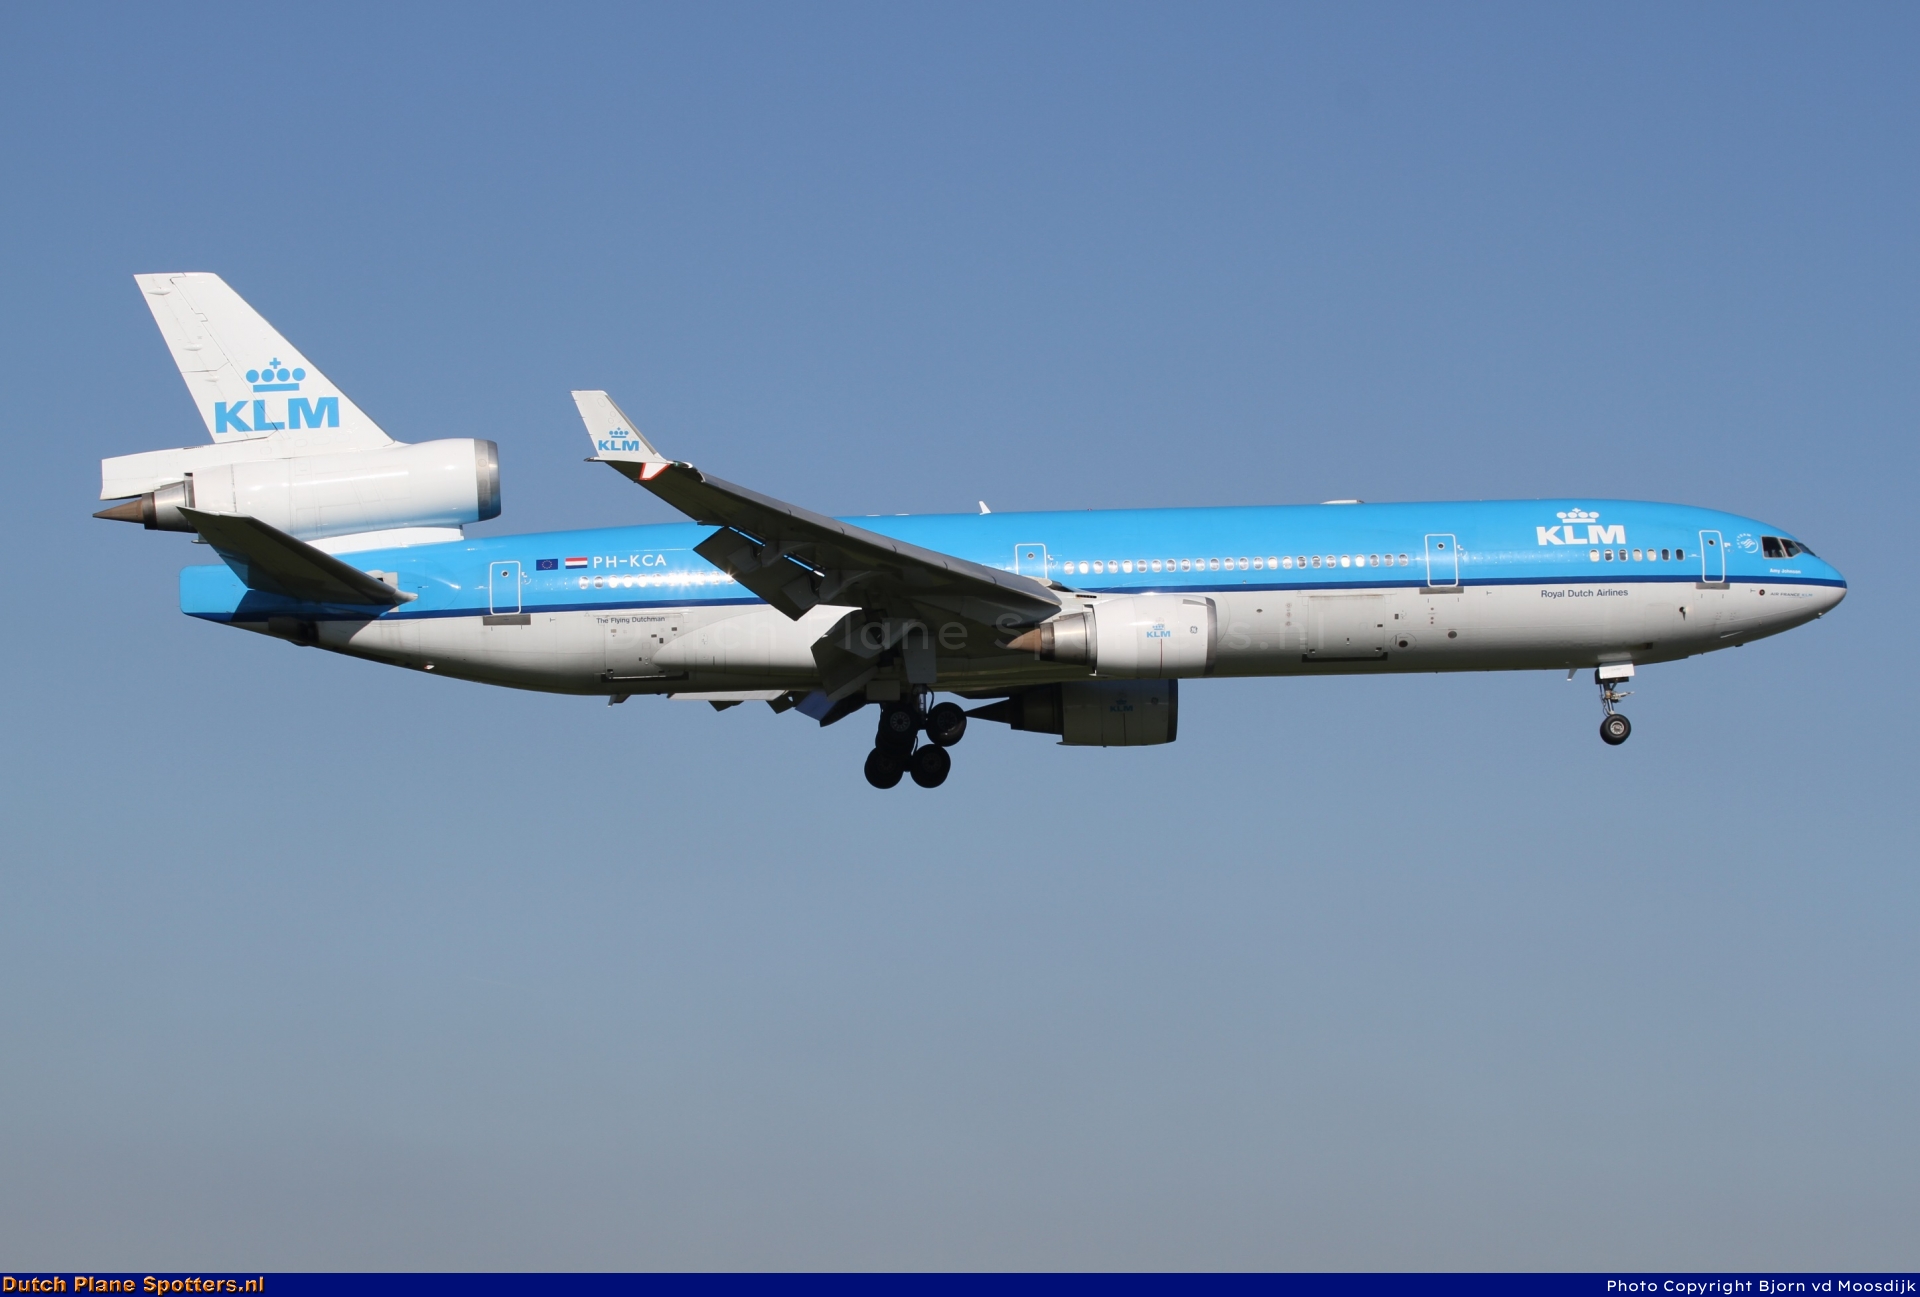 PH-KCA McDonnell Douglas MD-11 KLM Royal Dutch Airlines by Bjorn van de Moosdijk